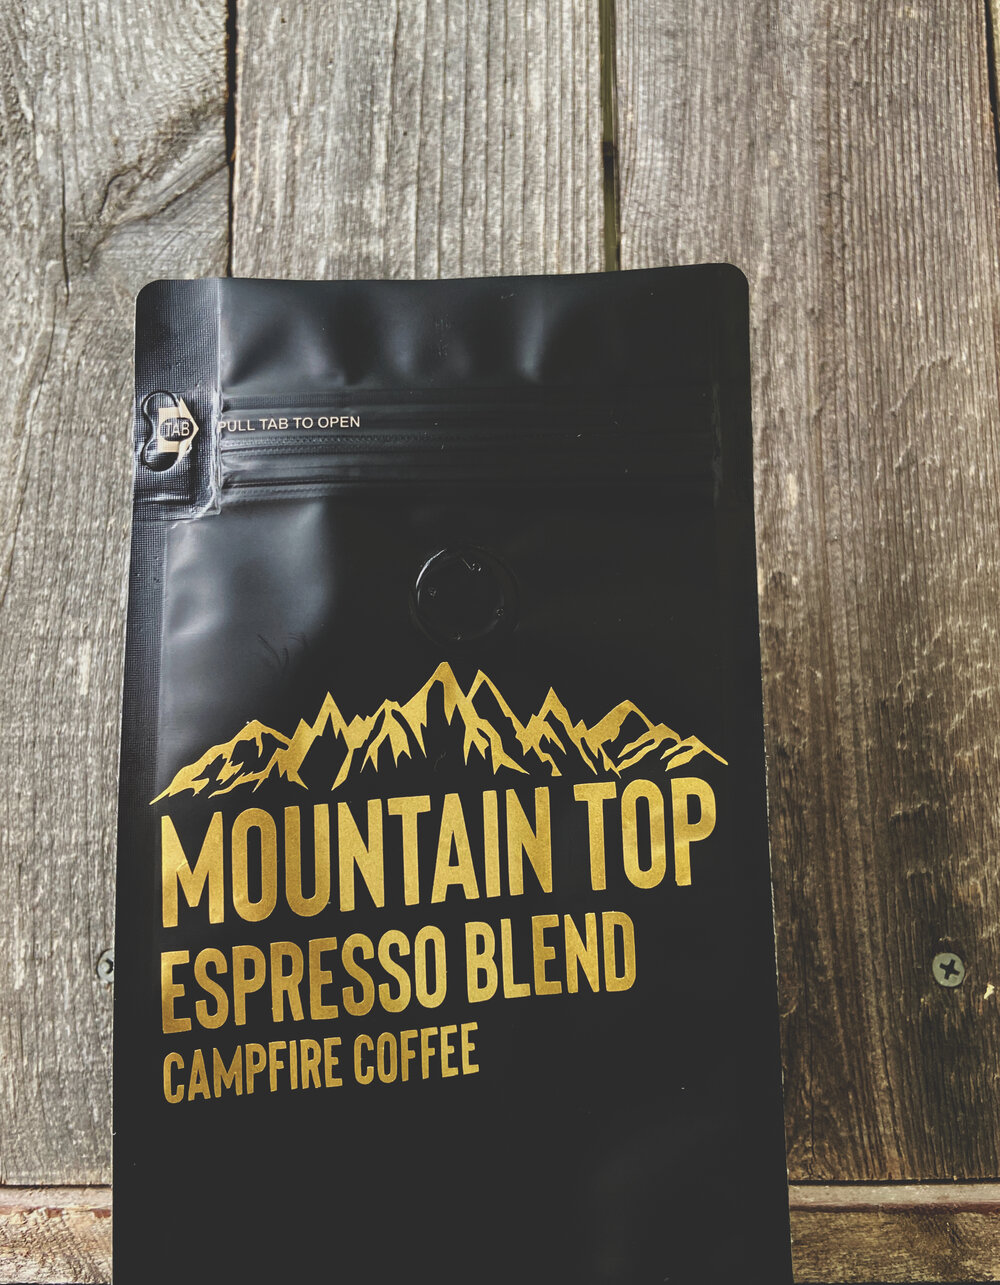 Campfire Coffee Co. - Mountain Top Espresso Blend - Whole Bean